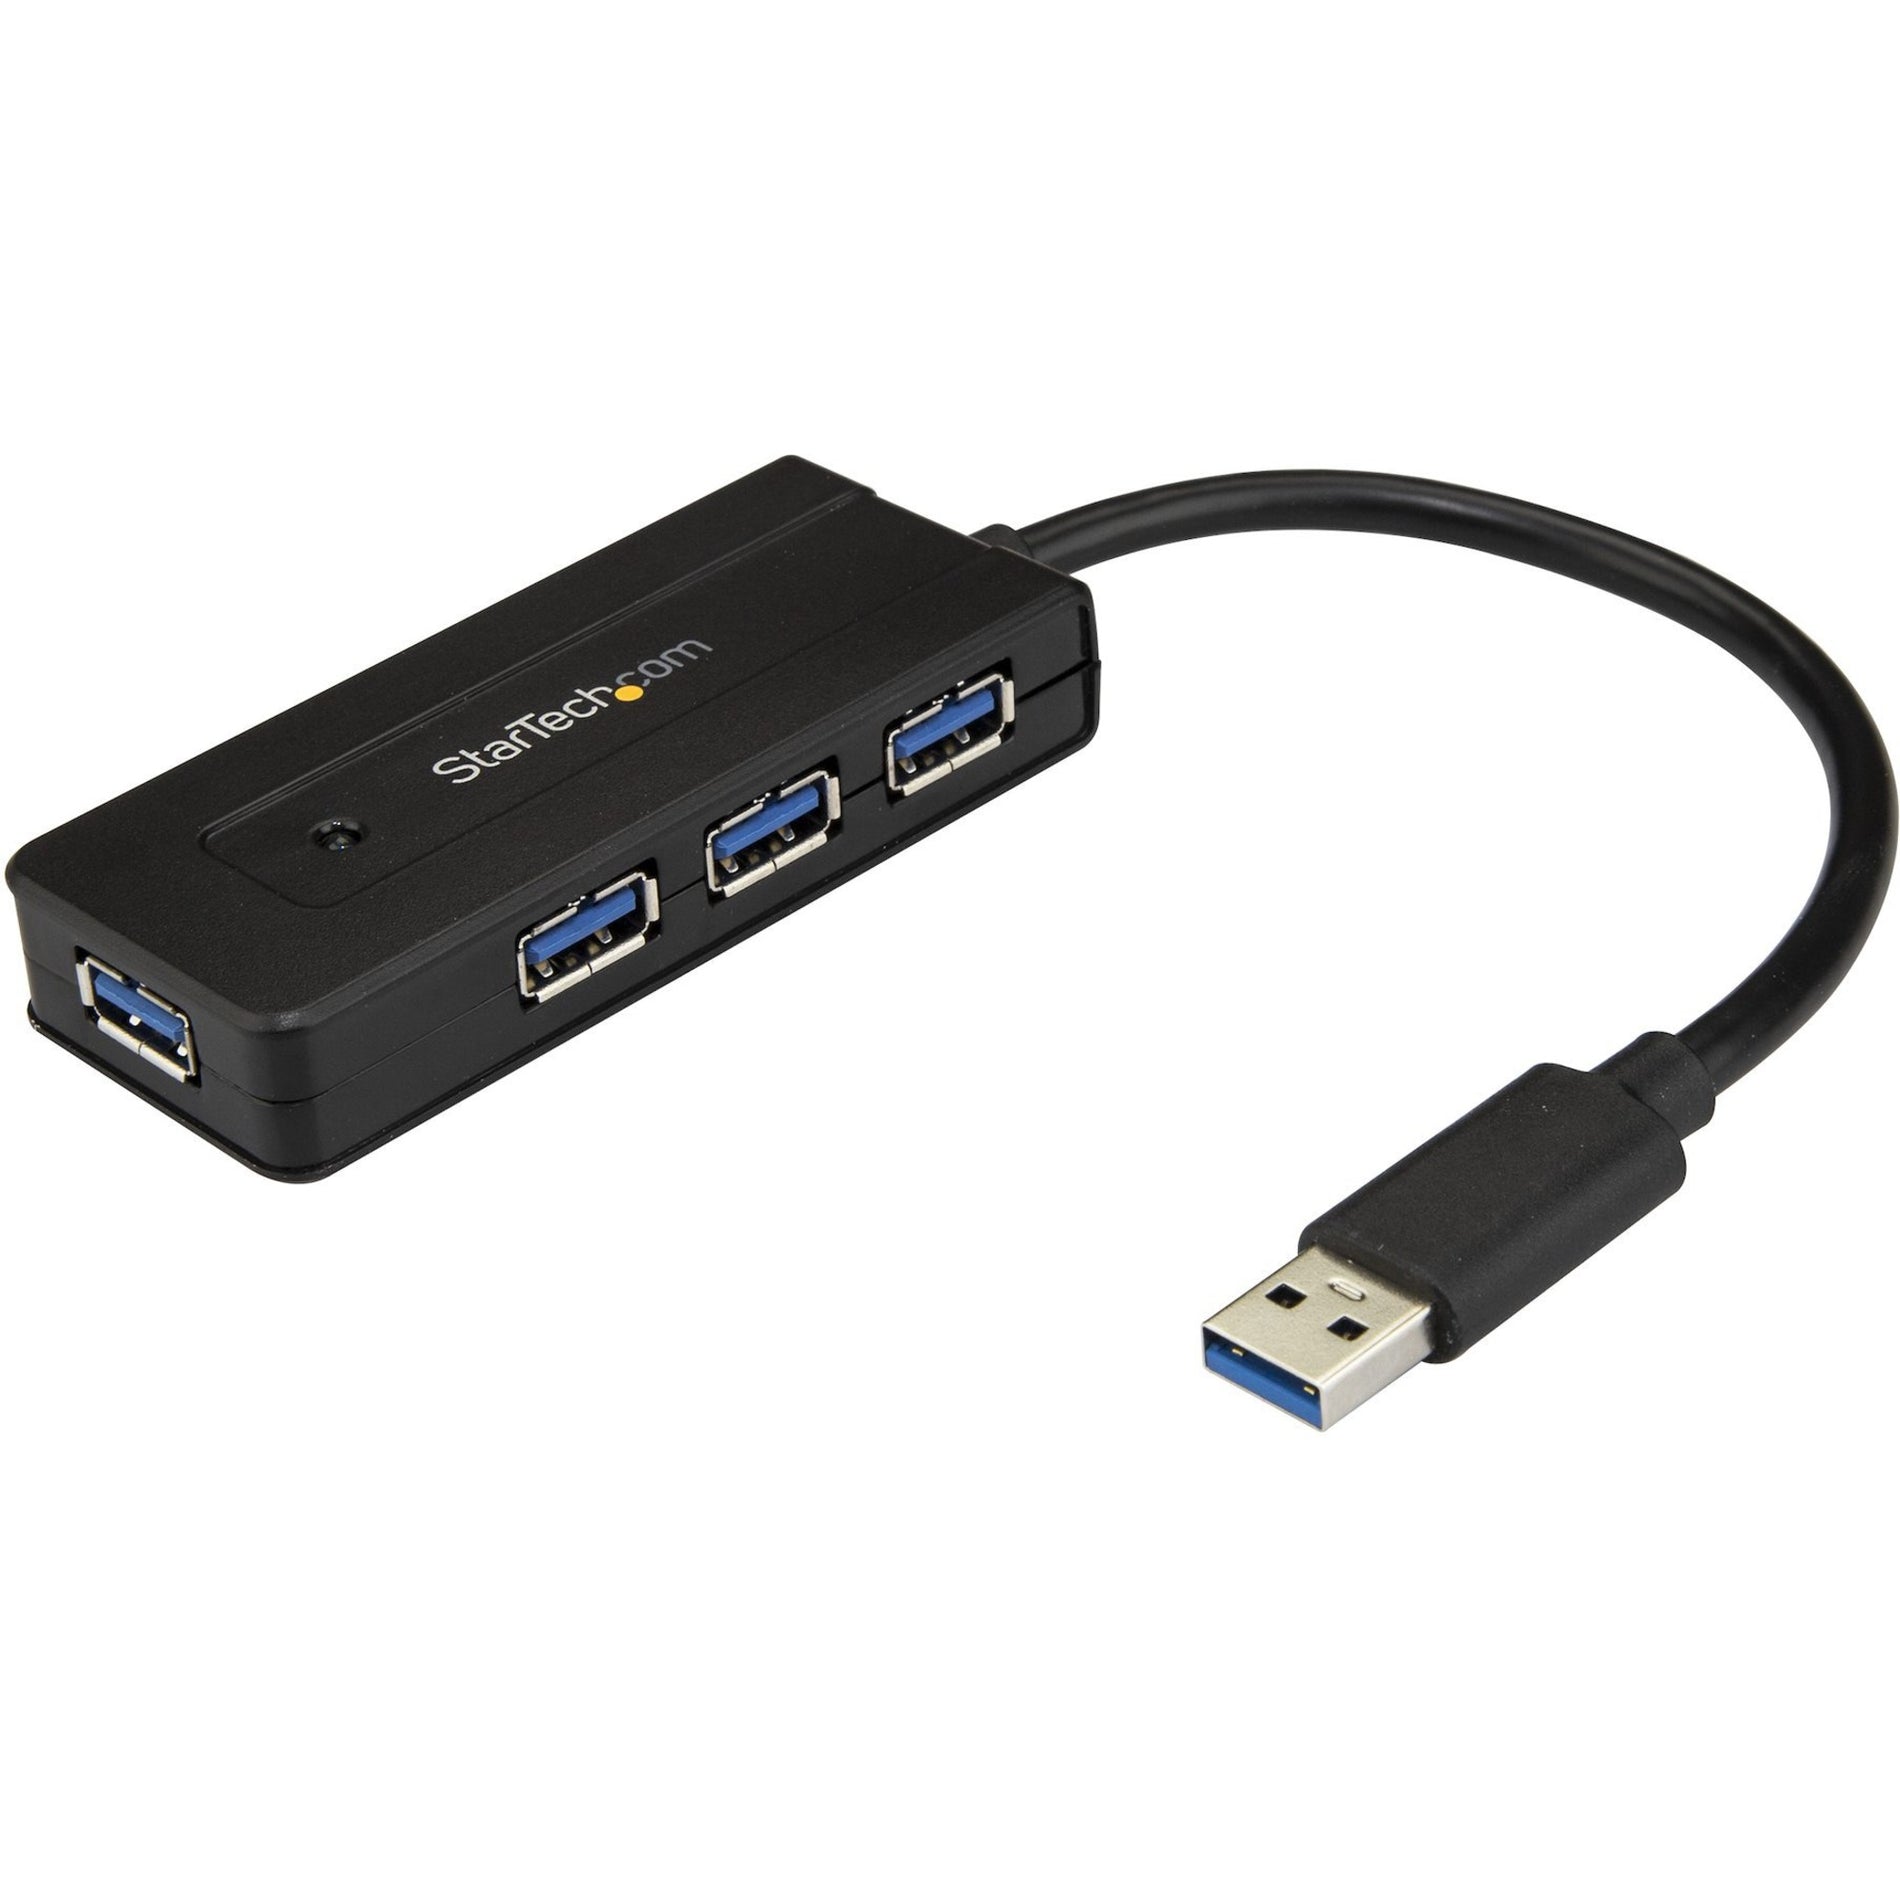 StarTech.com ST4300MINI 4-Port USB 3.0 Hub - Small USB with Charge Port, Powered USB 3.0 Hub Includes Power Adapter - USB Port Extender